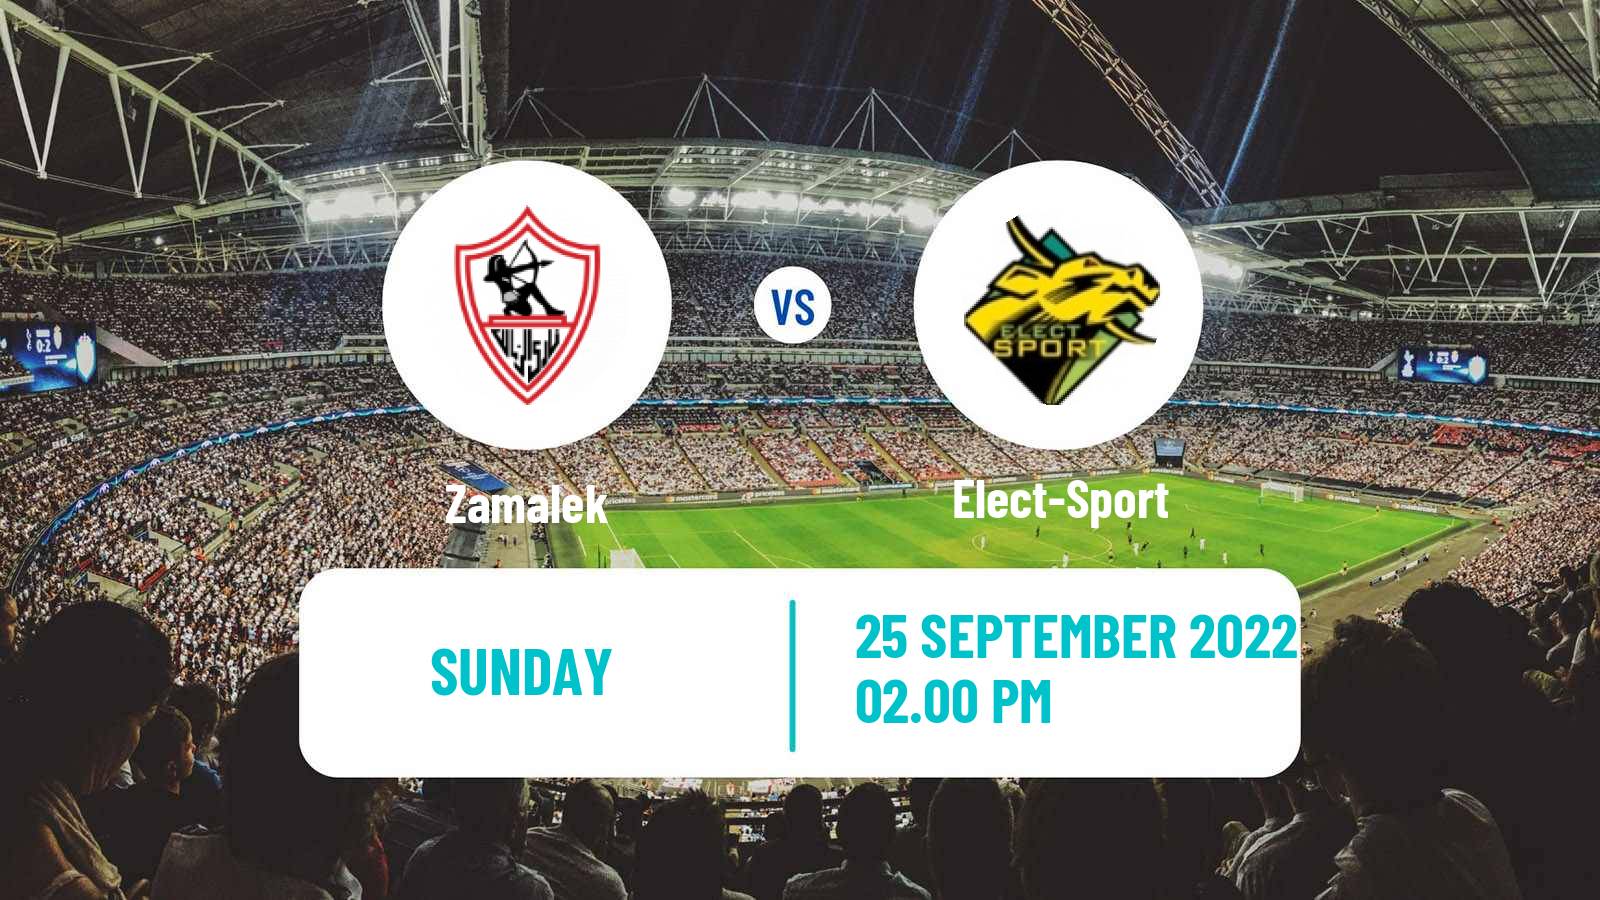 Soccer CAF Champions League Zamalek - Elect-Sport